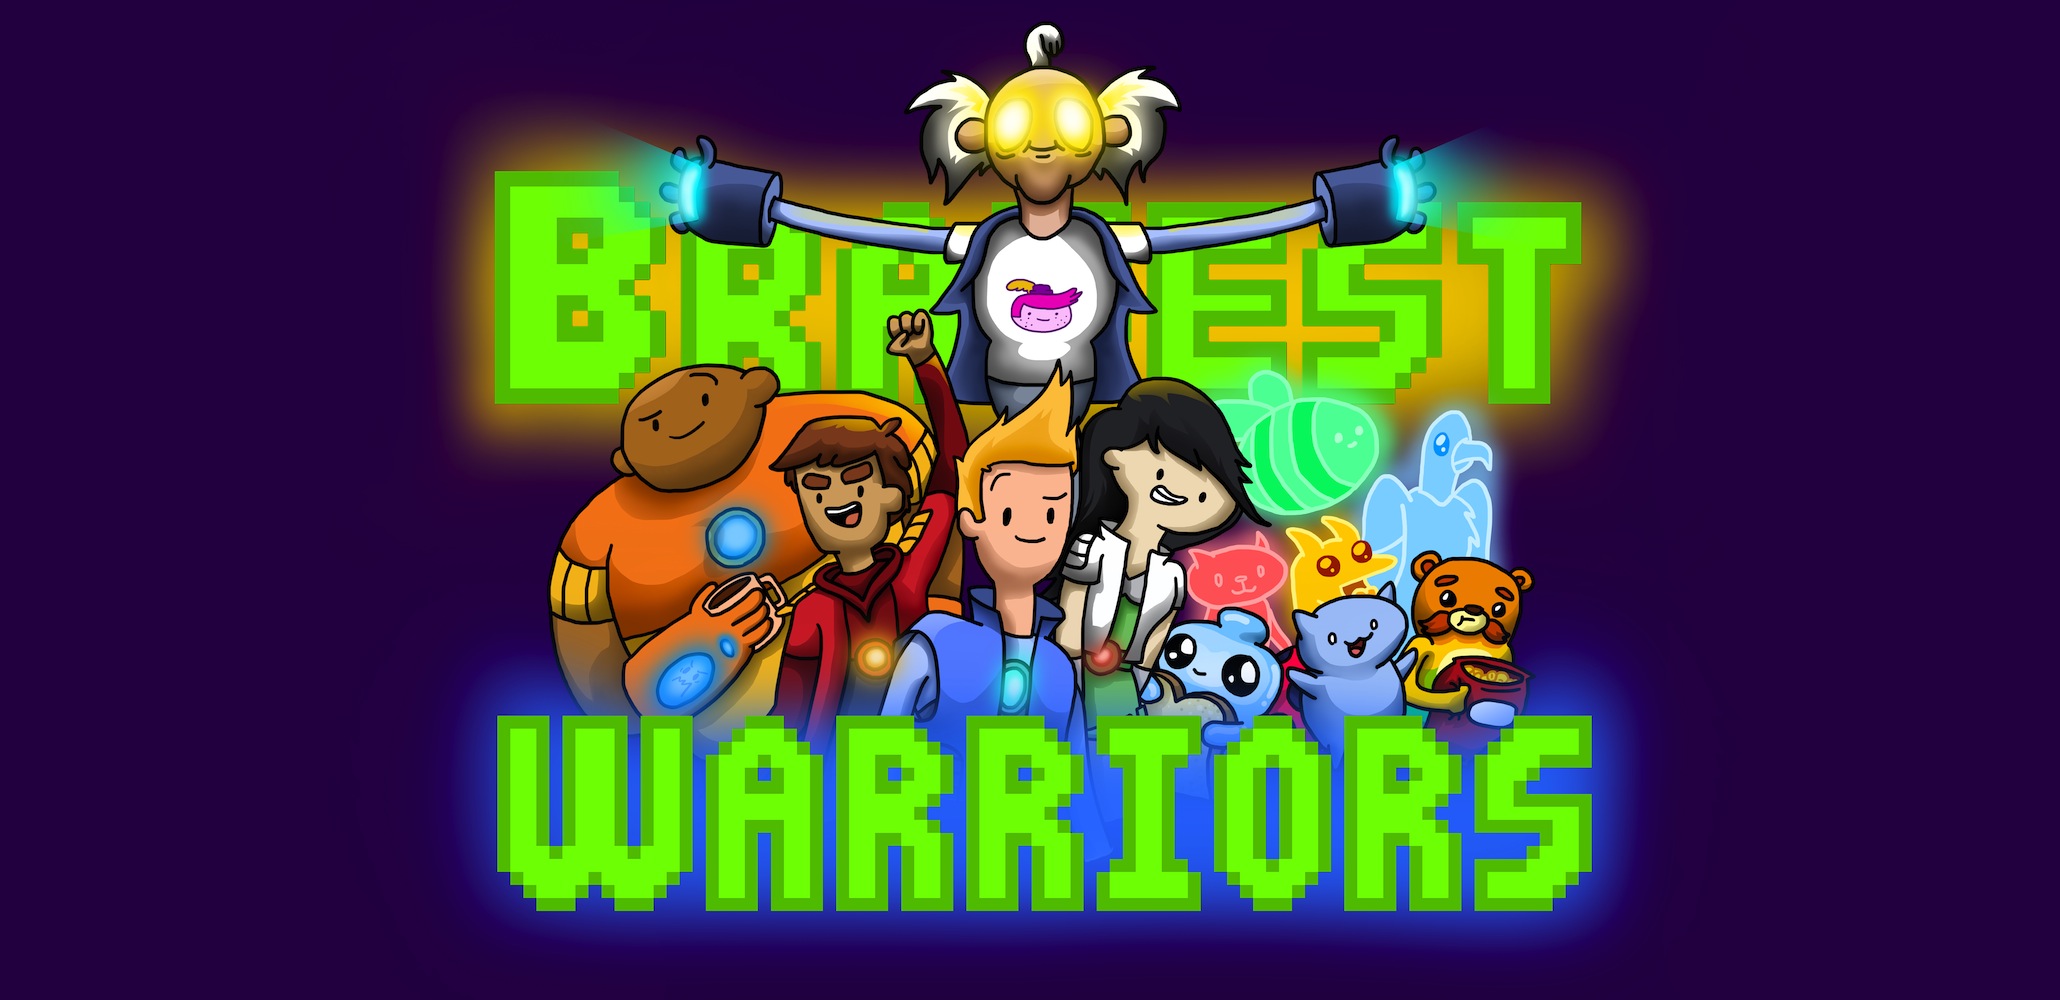 Bravest Warriors Poster by DavidBurt